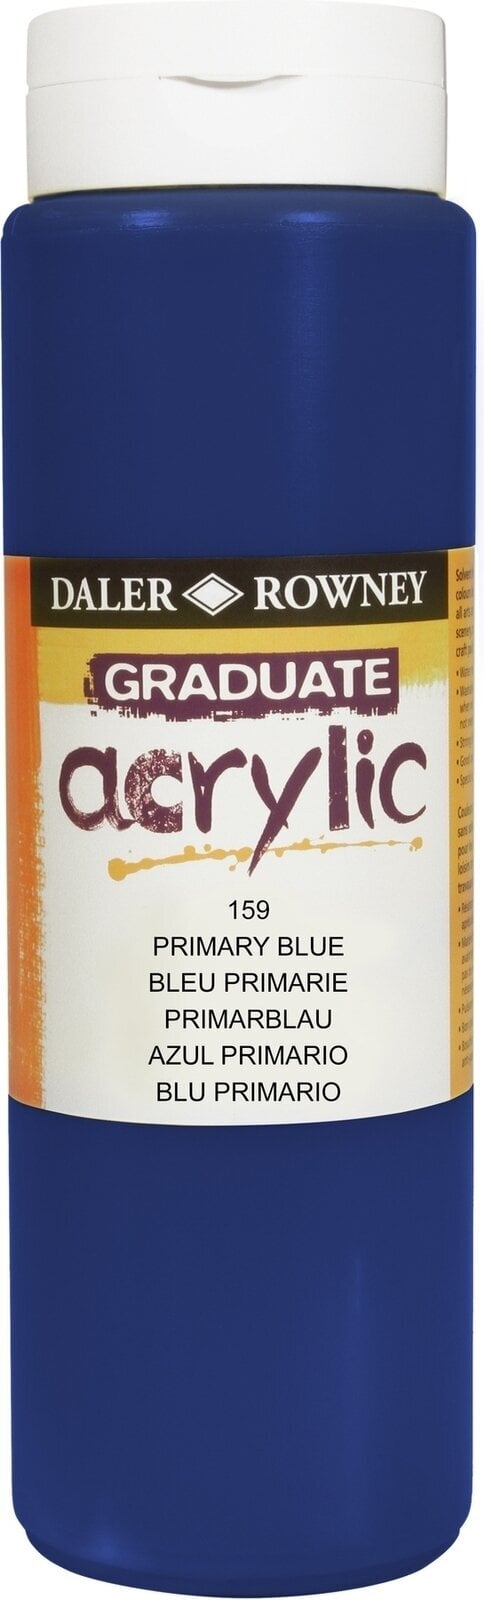 Akrylmaling Daler Rowney Graduate Akrylmaling Primary Blue 500 ml 1 stk.